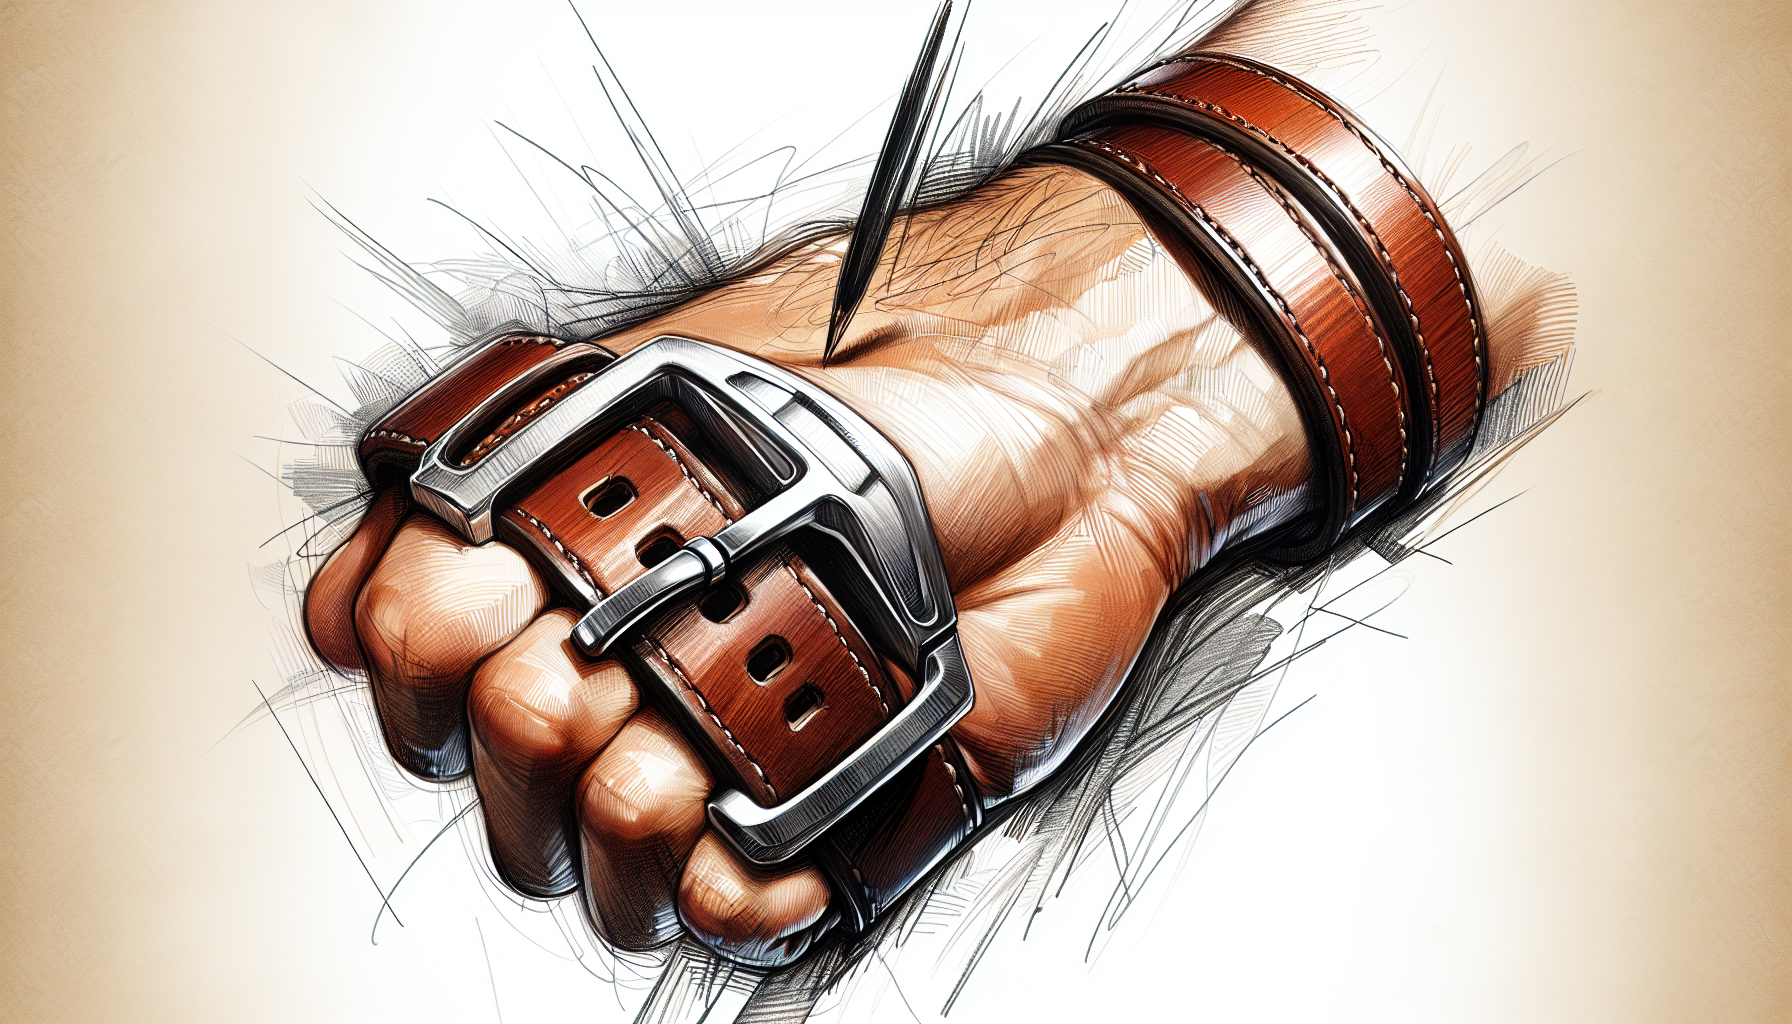 Creative illustration of bund strap wrist protection